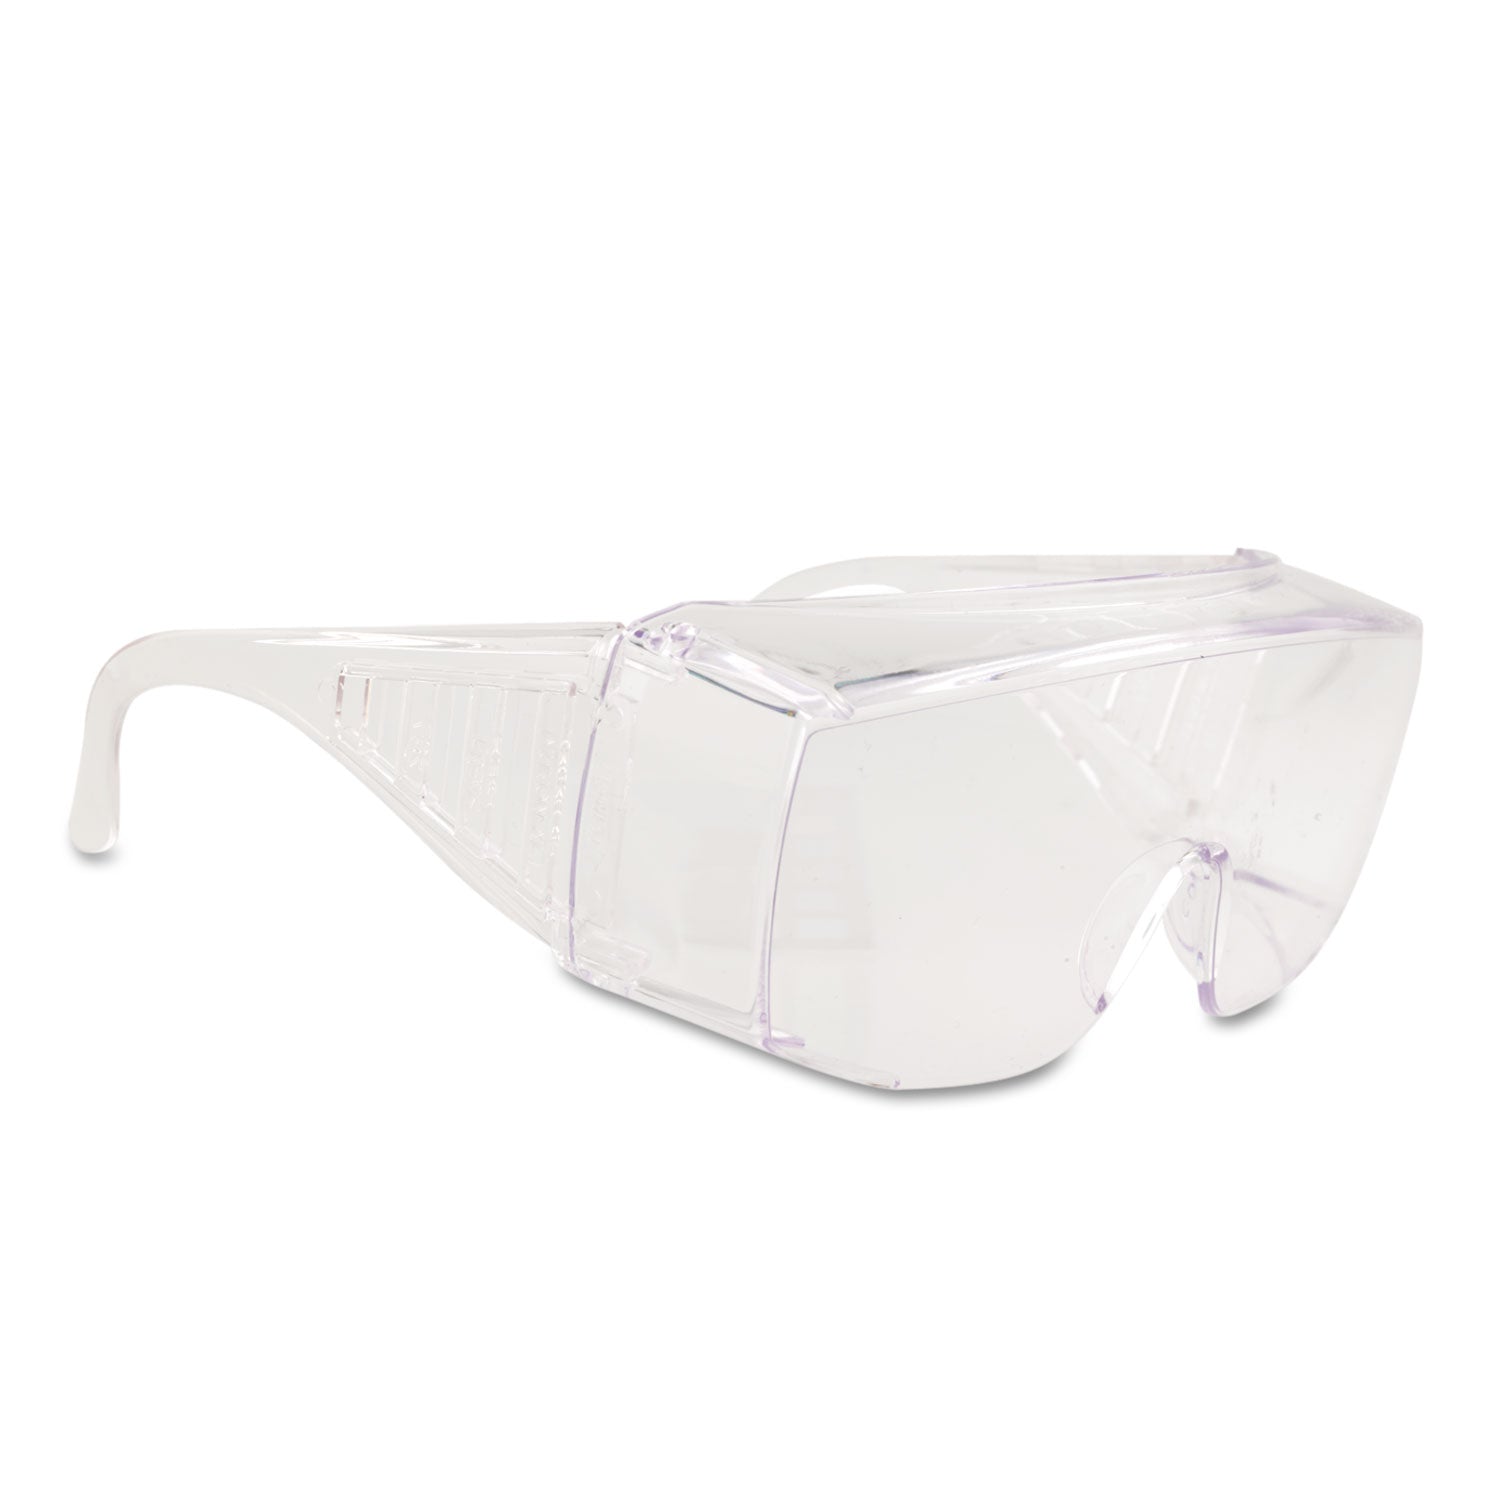 Yukon Safety Glasses, Wraparound, Clear Lens - 